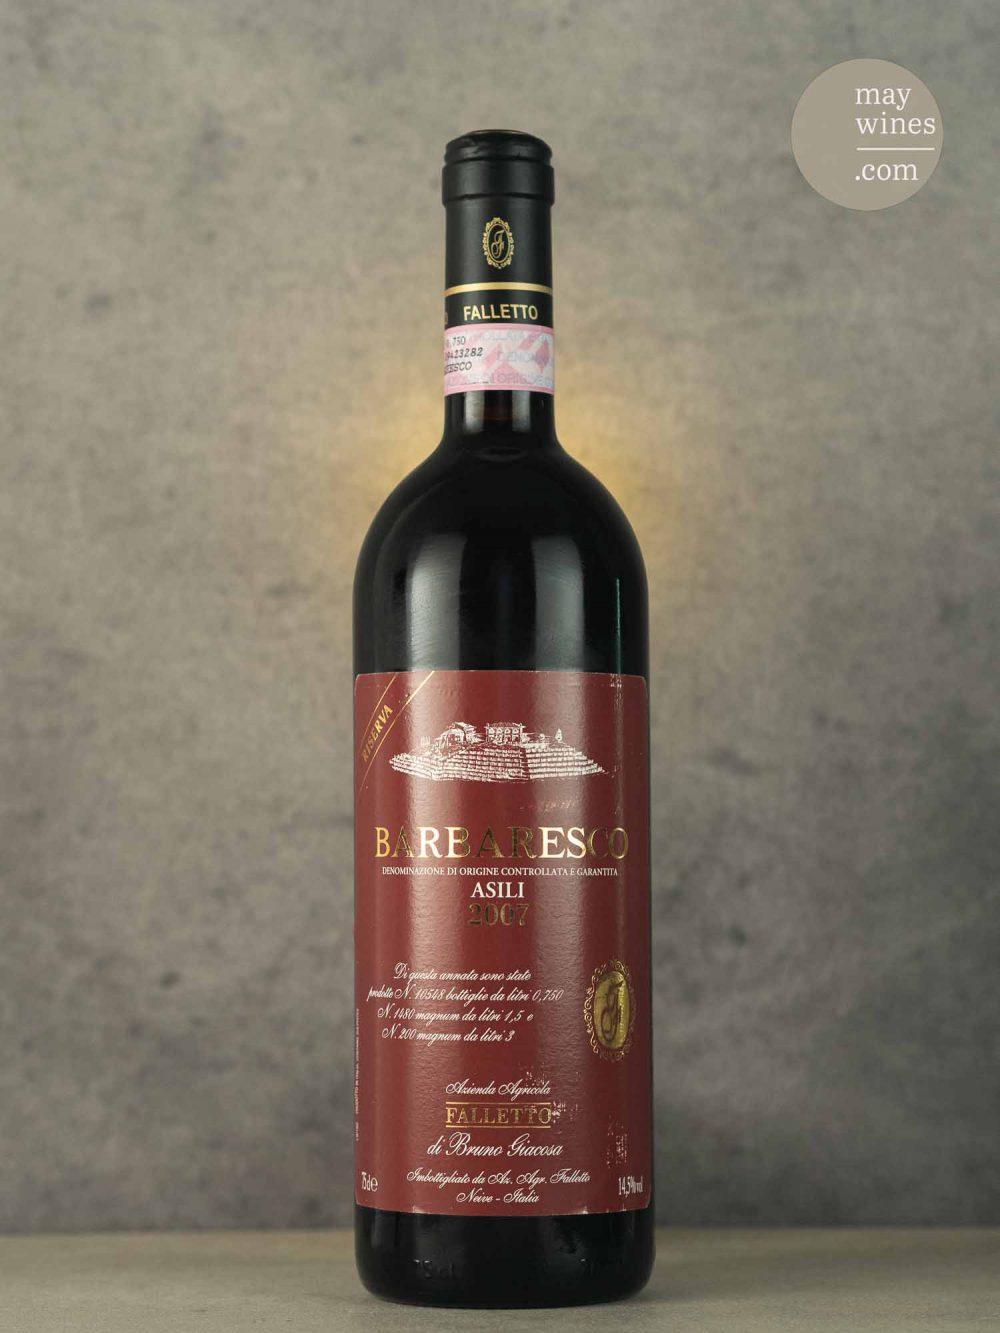 May Wines – Rotwein – 2007 Barbaresco Asili Riserva - Bruno Giacosa